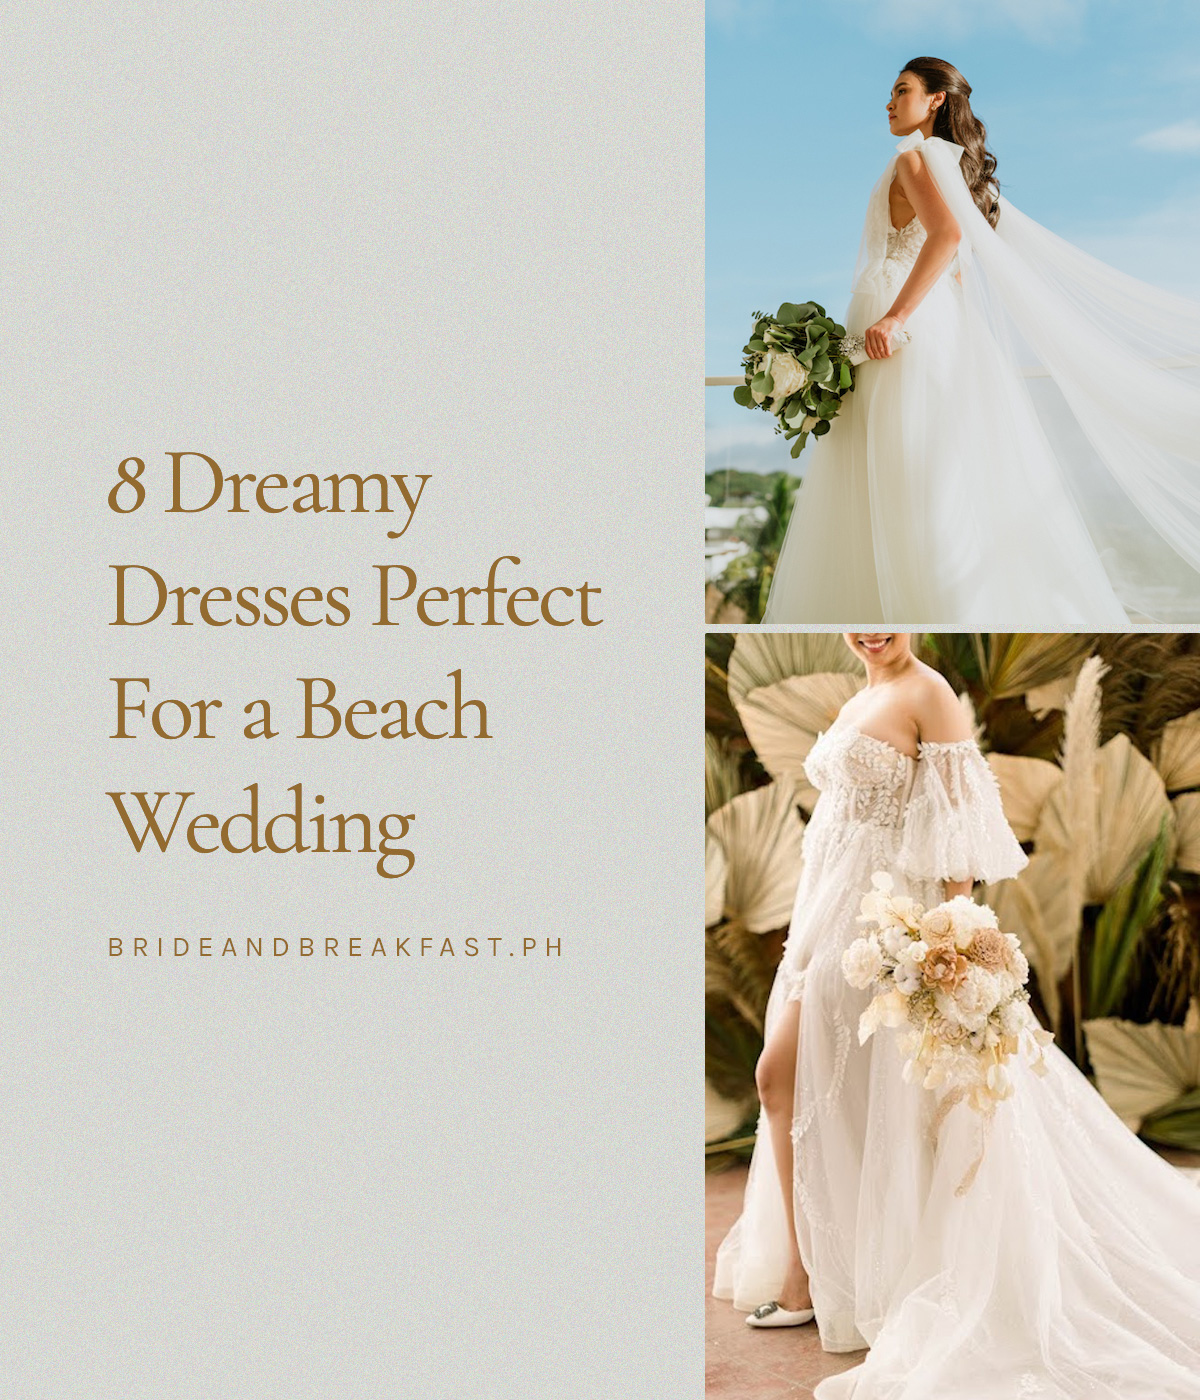 8 Dreamy Dresses Perfect For a Beach Wedding